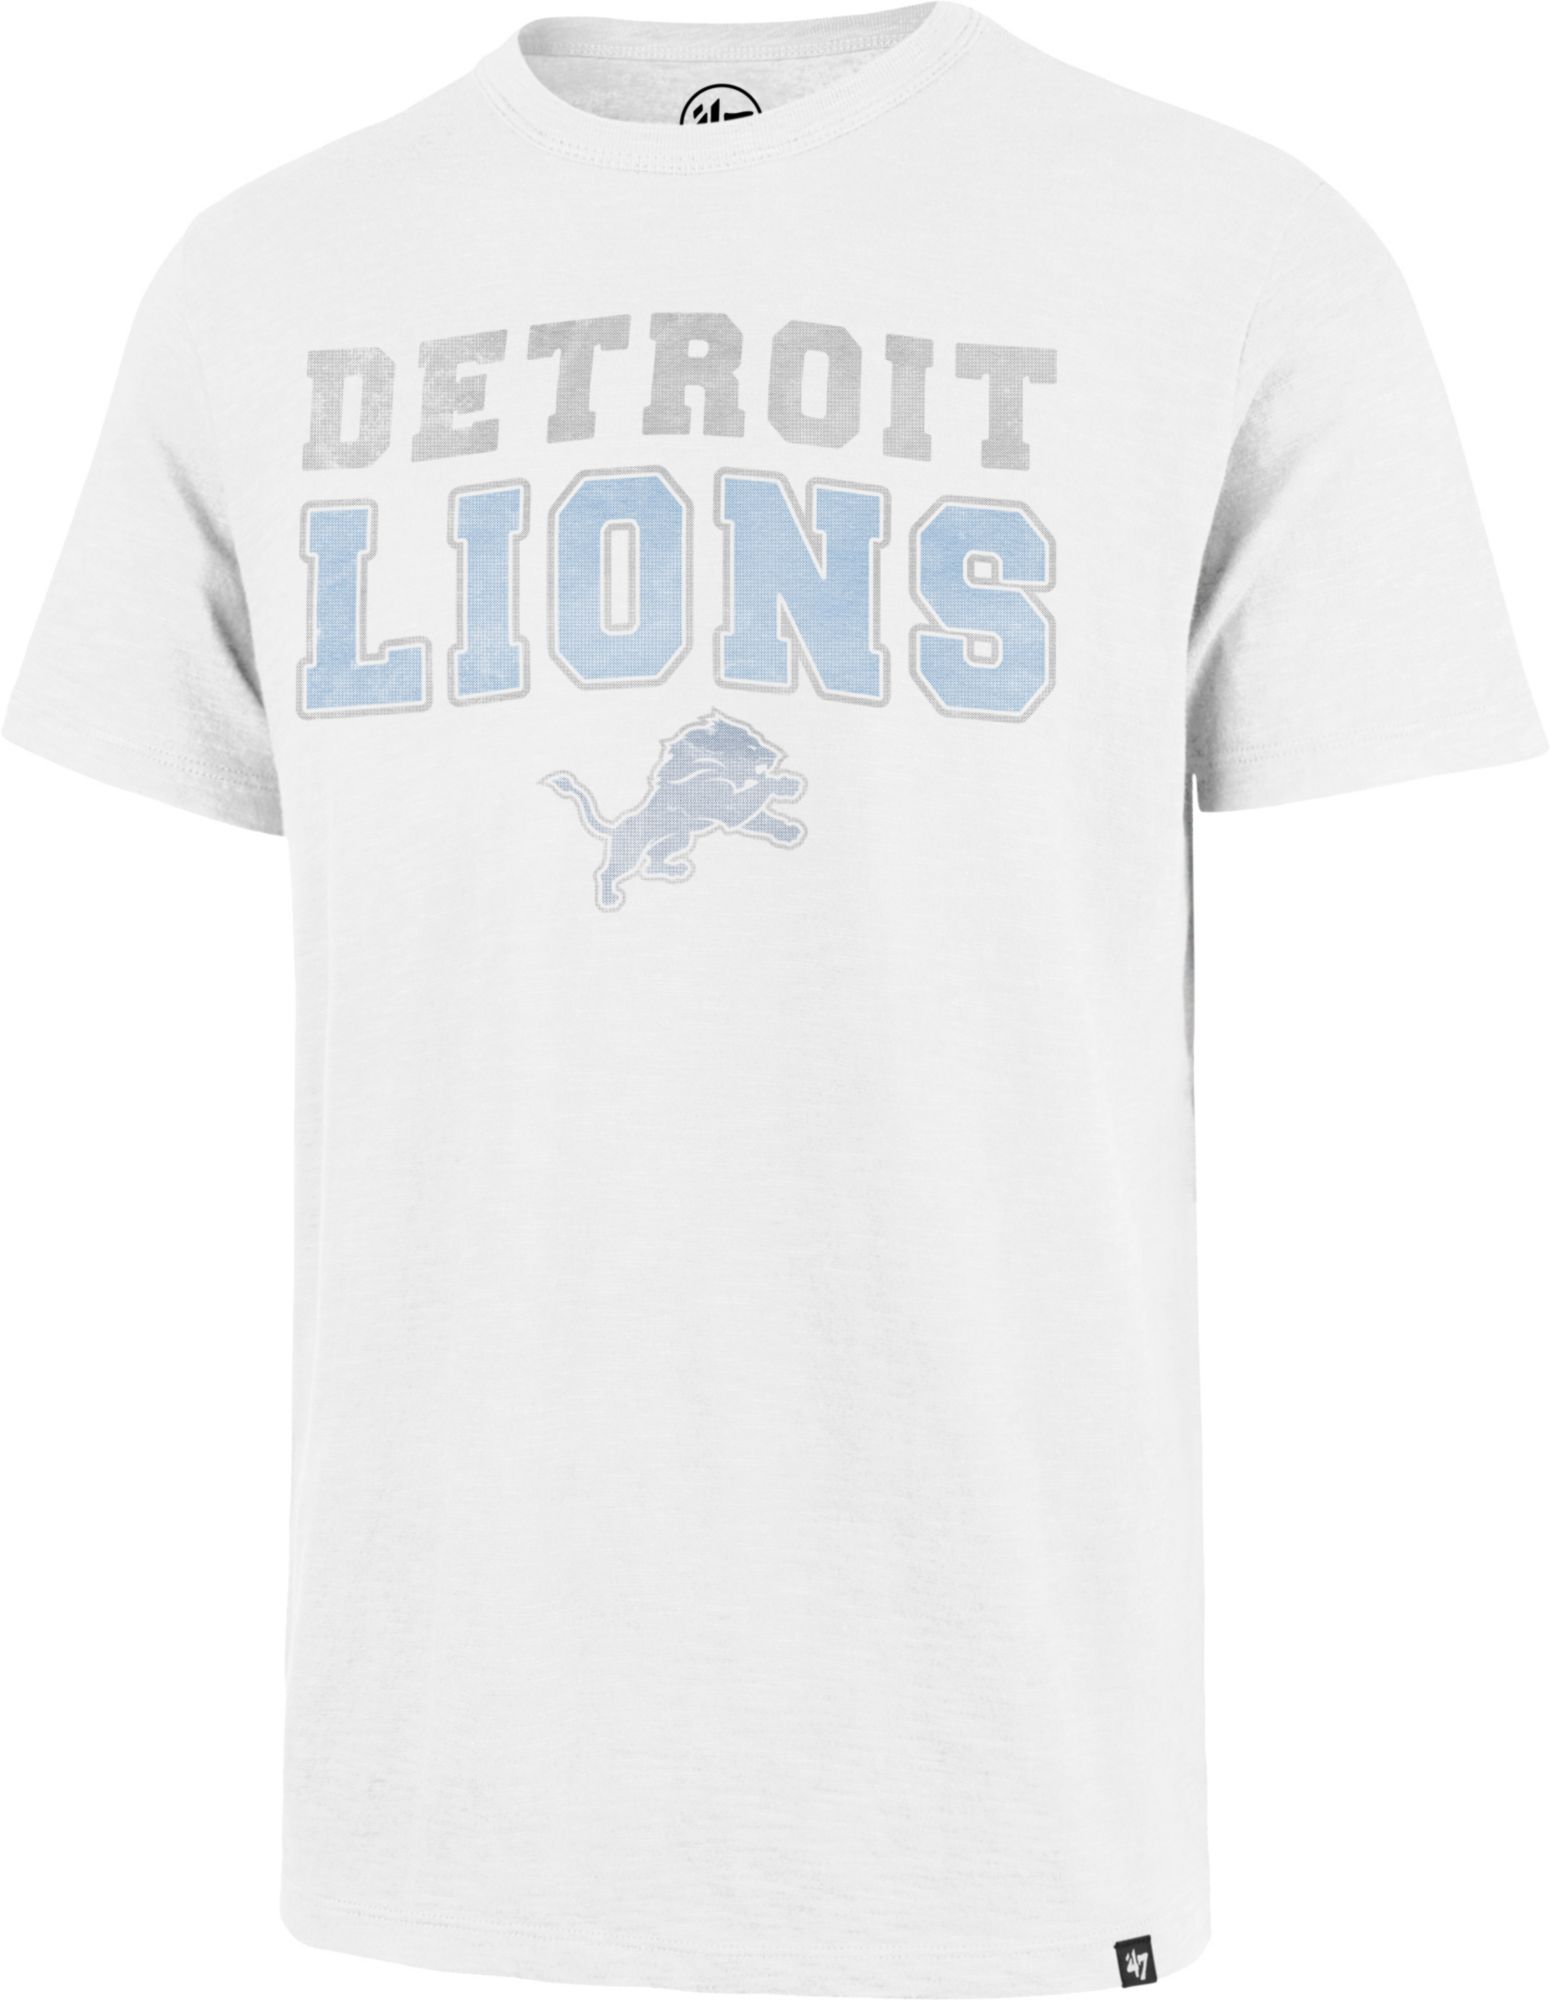 Dick's Sporting Goods '47 Men's Detroit Tigers Camo Foxtrot T-Shirt